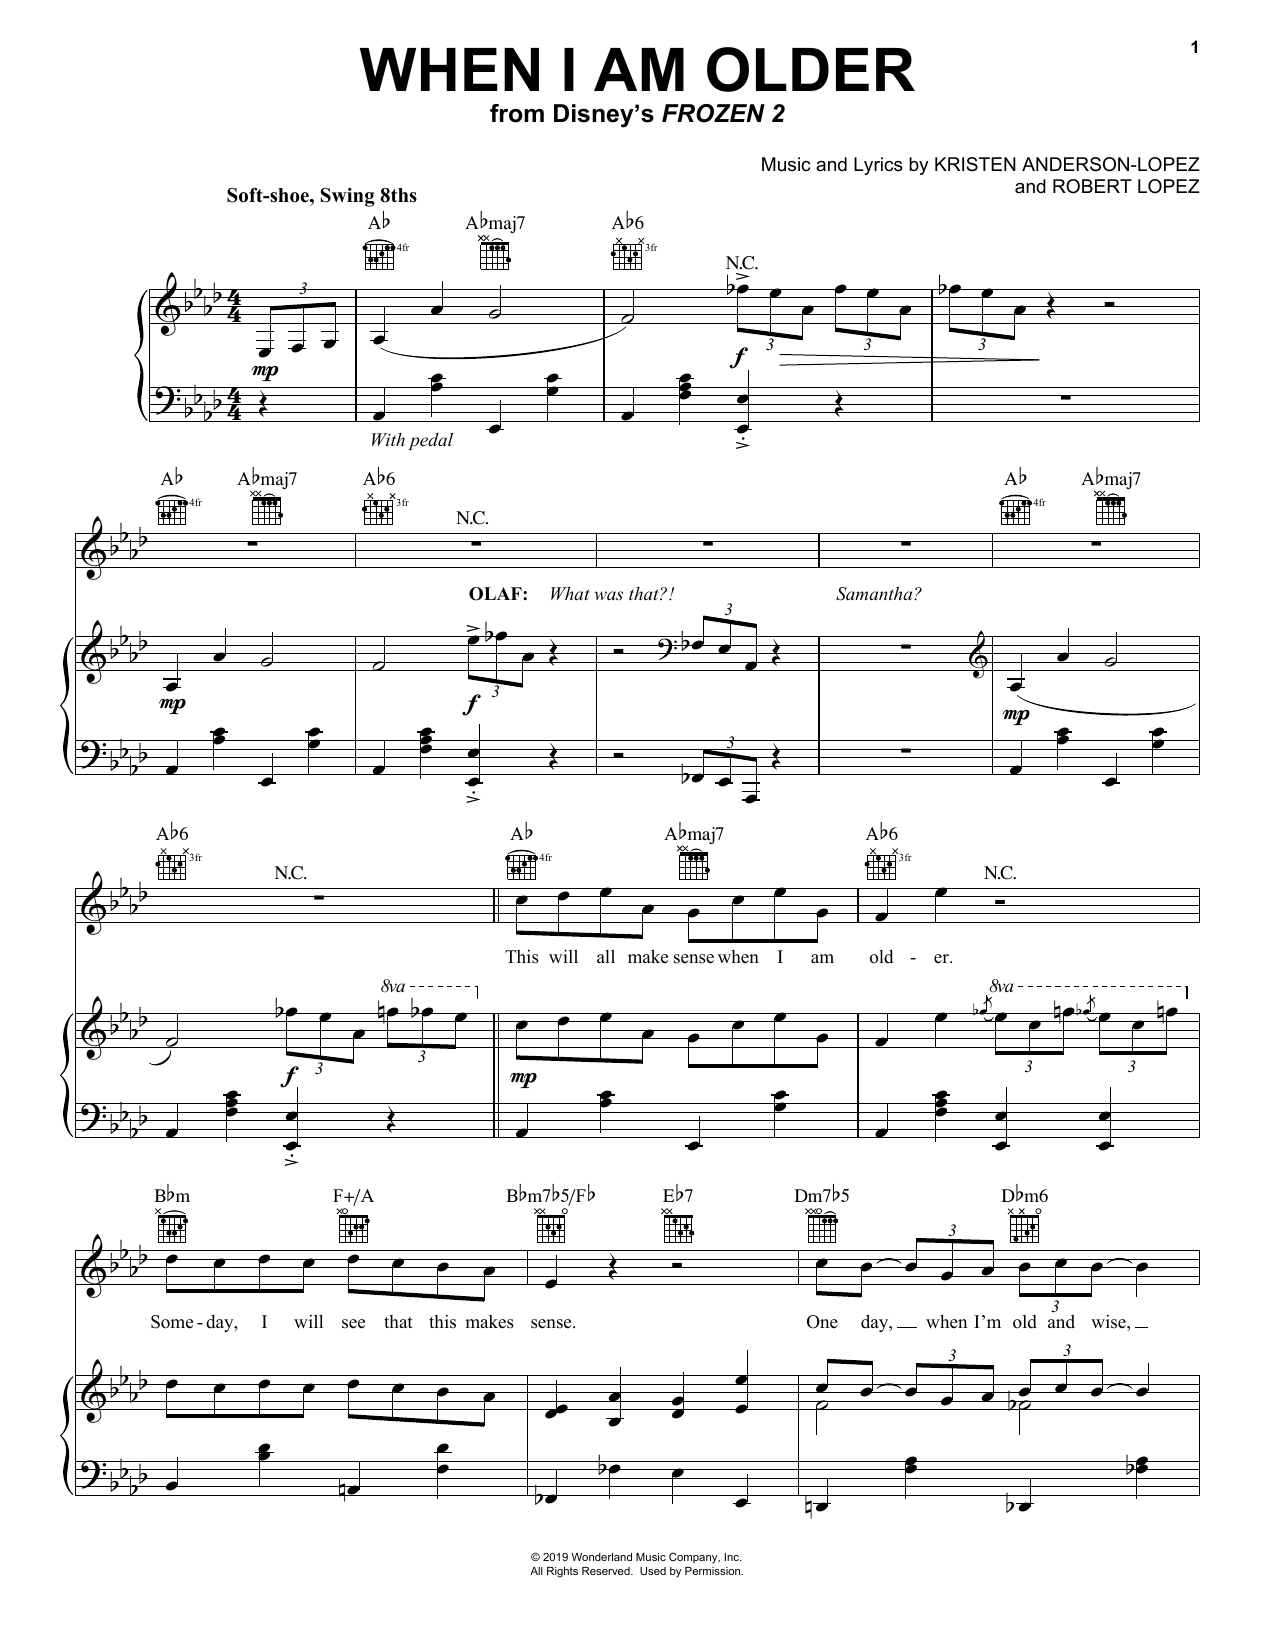 Josh Gad When I Am Older (from Disney's Frozen 2) Sheet Music Notes & Chords for Ukulele - Download or Print PDF